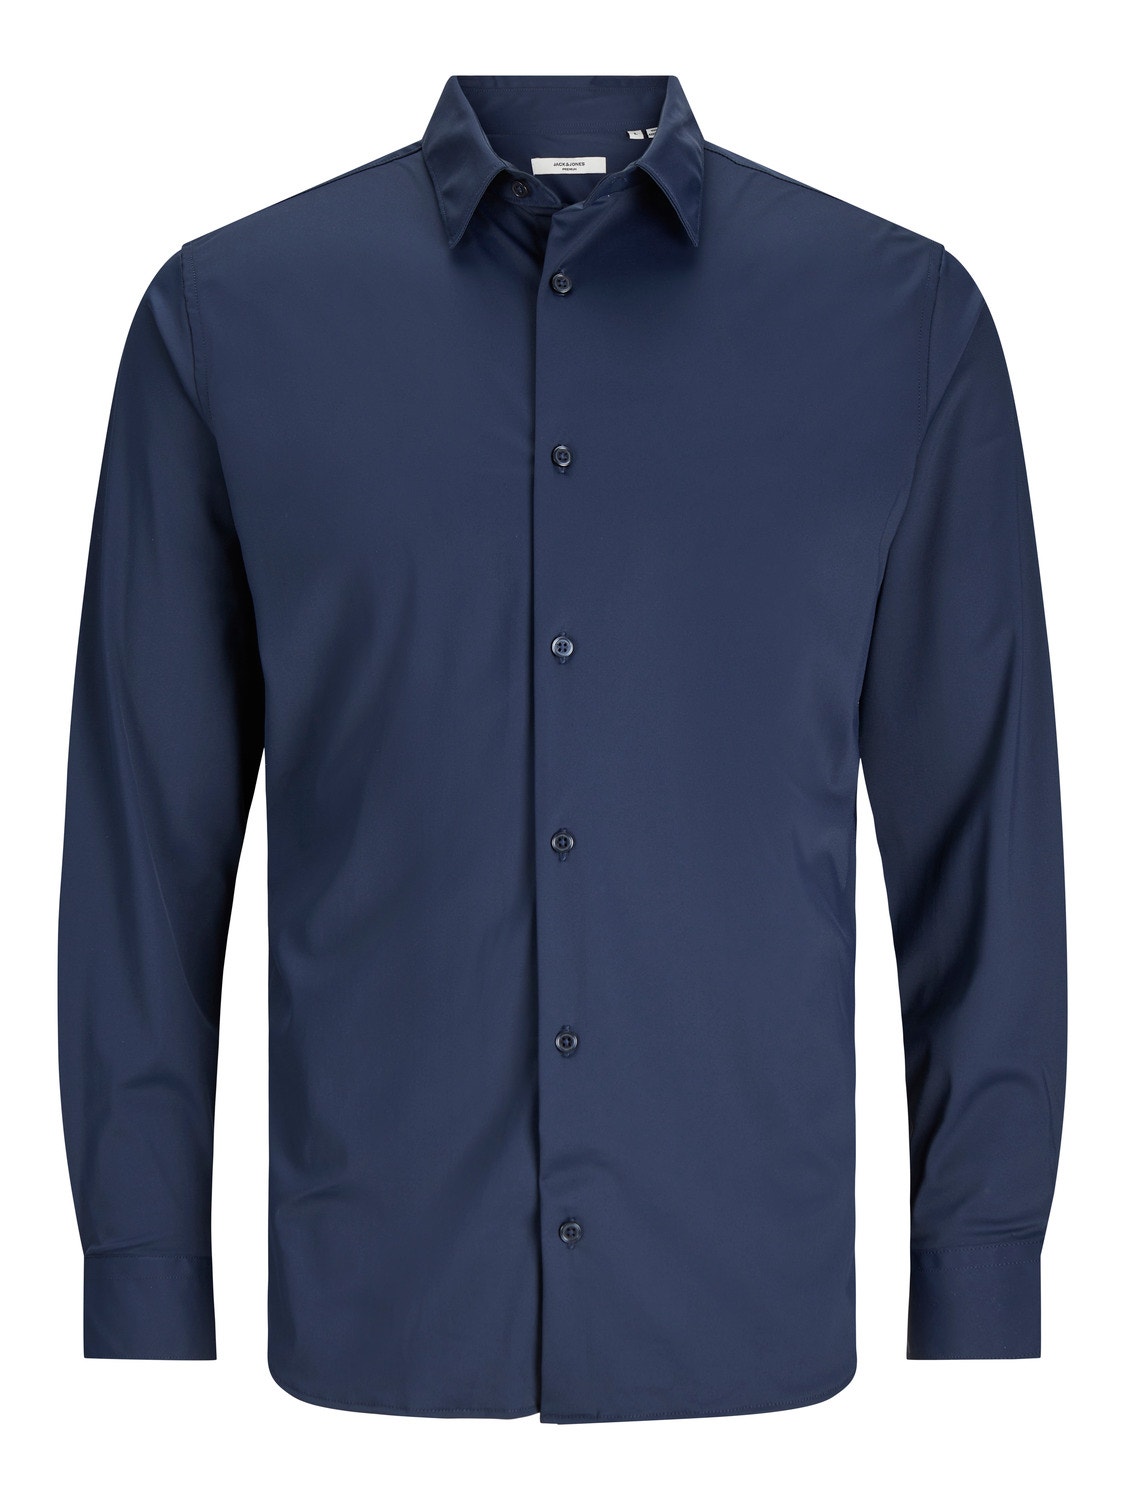 Jack & Jones Slim Fit Muodollinen paita -Navy Blazer - 12241530